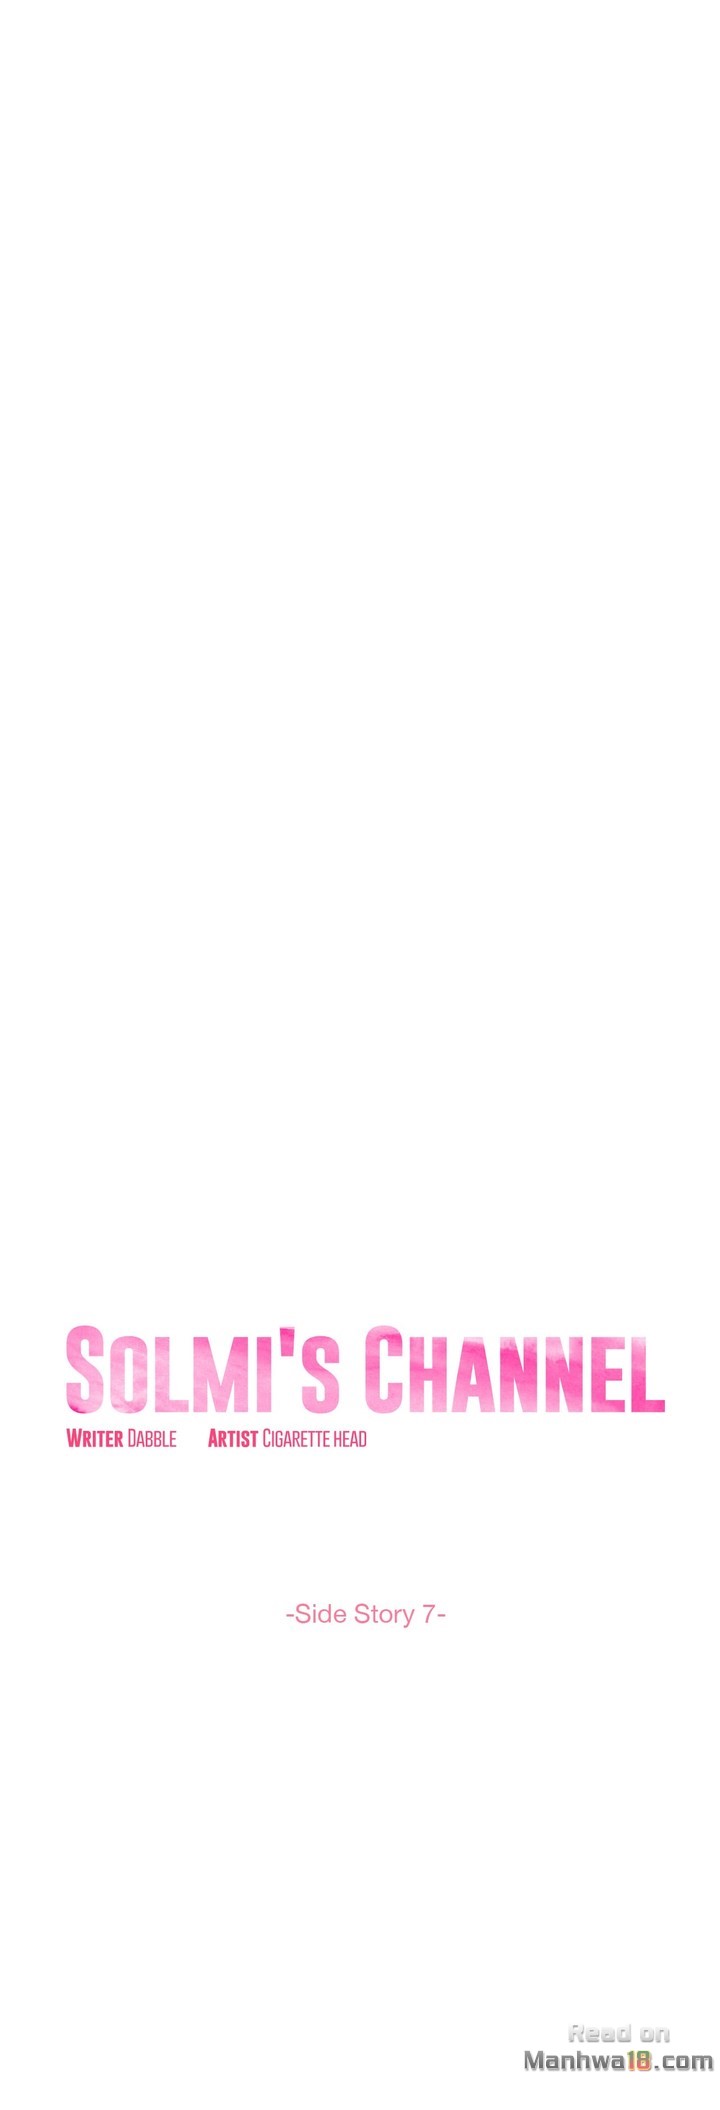 The image Solmi's Channel - Side Story 7 - 5d7XkludqIdAIJT - ManhwaManga.io